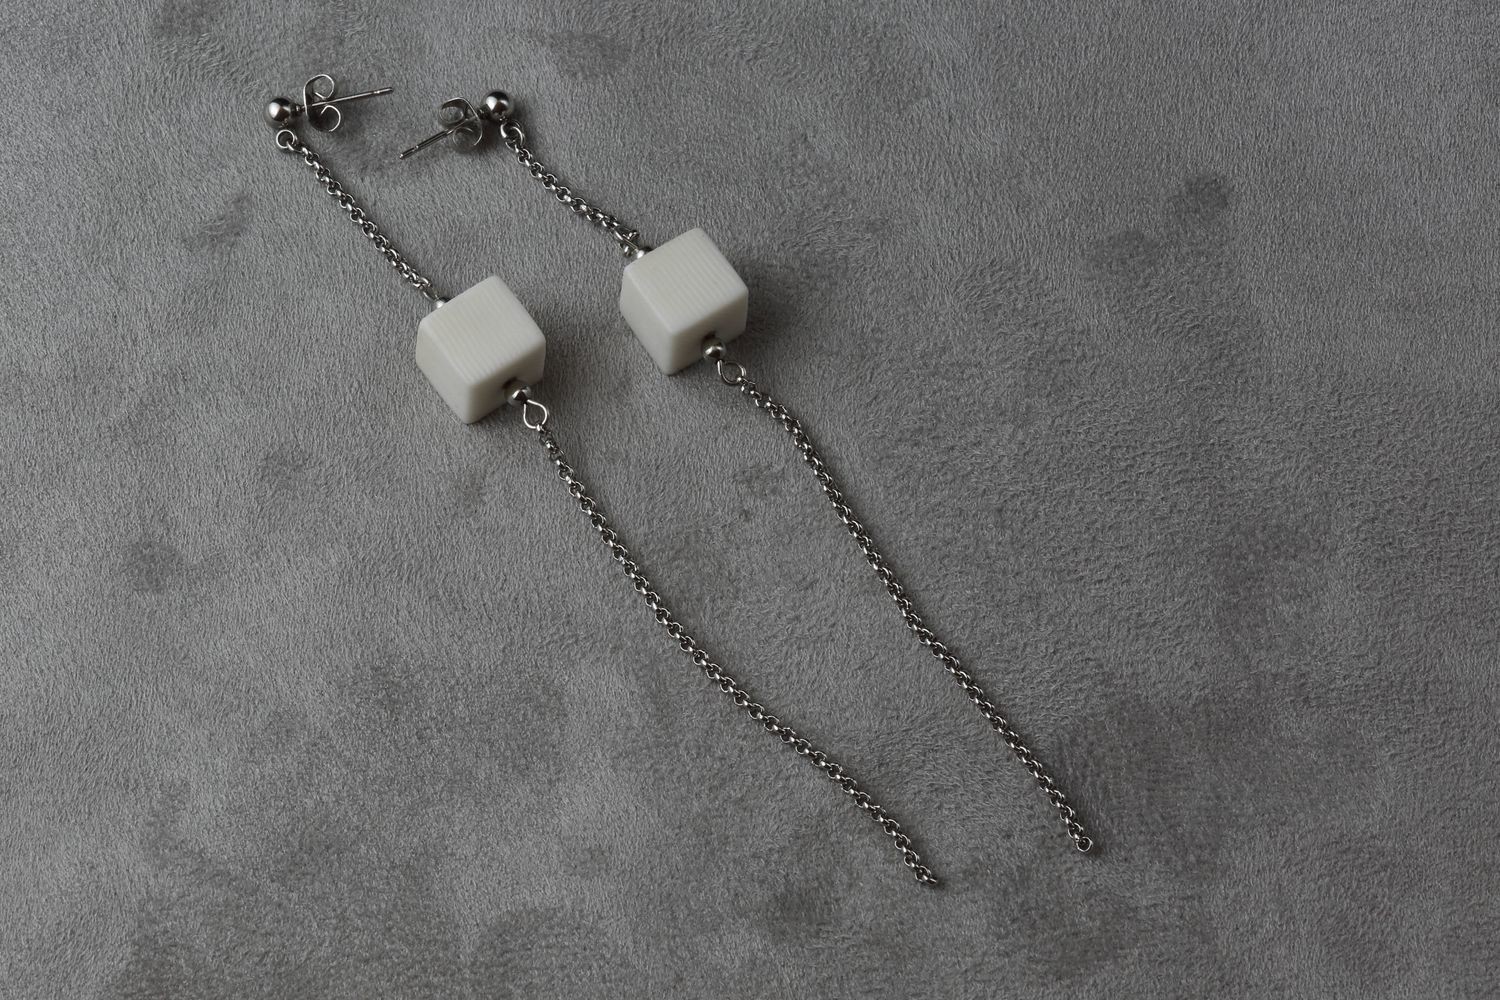 Cерьги из белого фарфора, кубик в середине цепочки. White porcelain earrings, a cube in the middle of the chain.